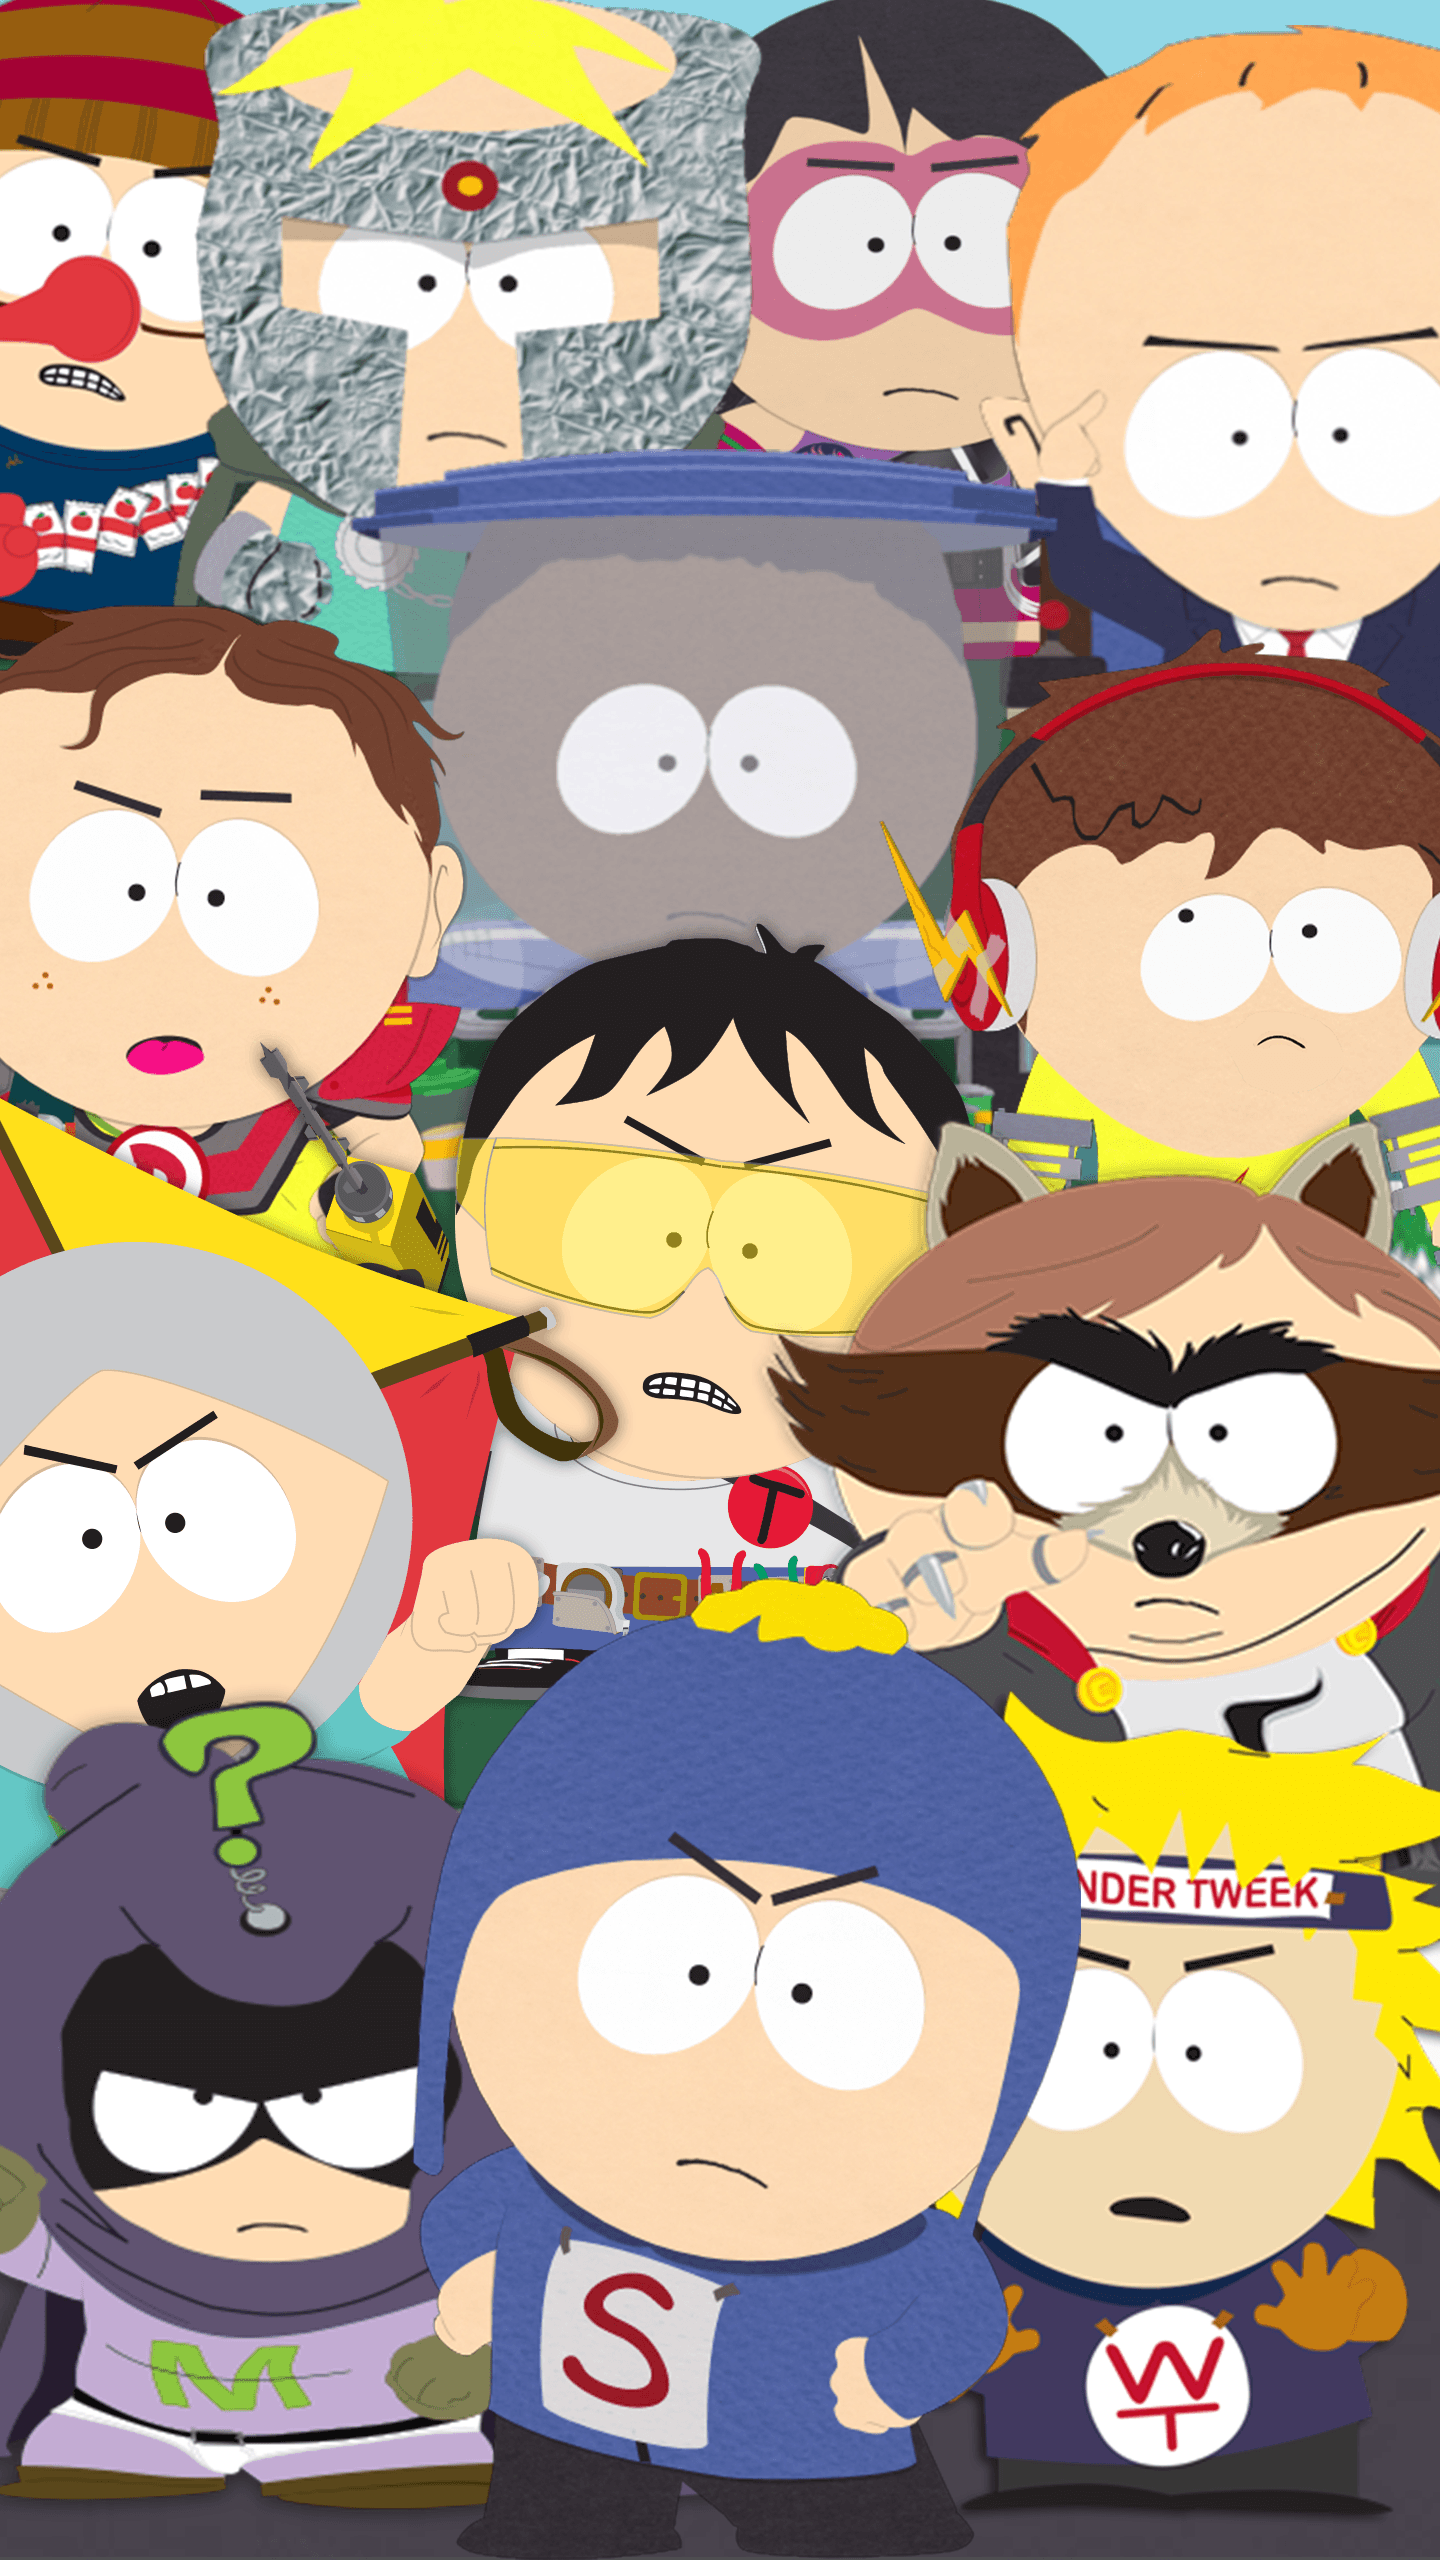 South Park Super Heroes Wallpaper for phones. Enjoy